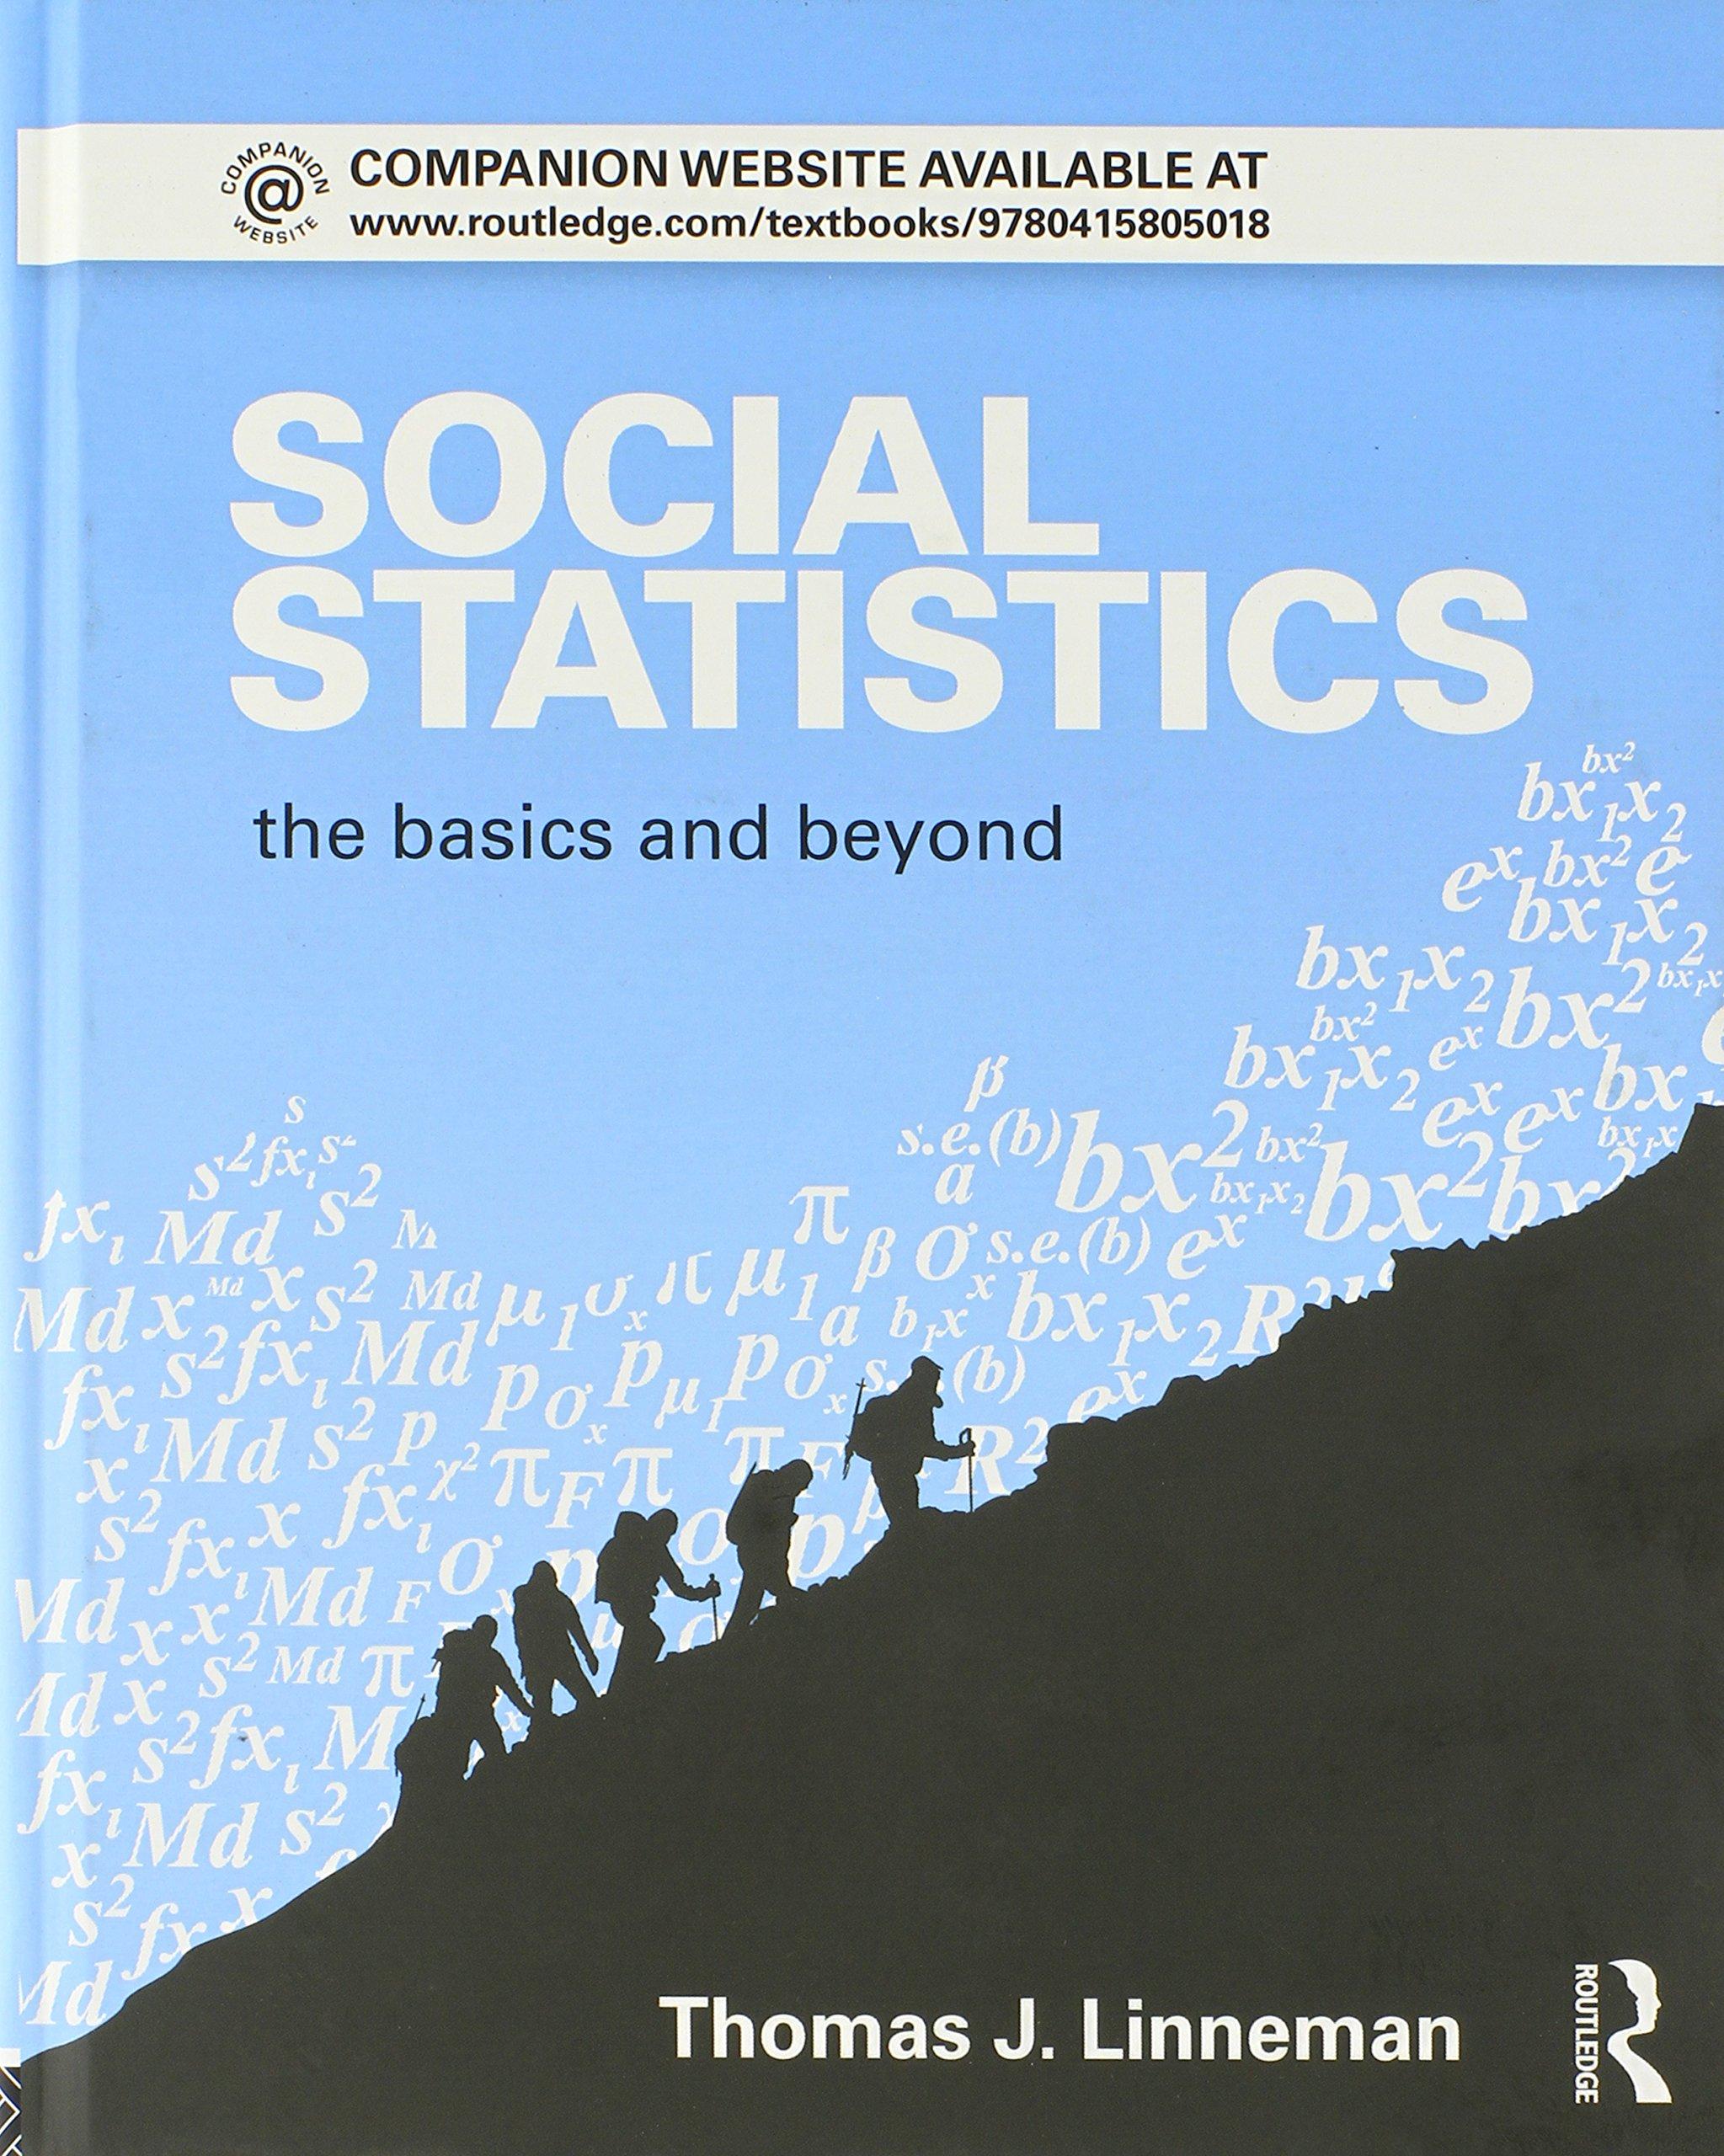 social statistics the basics and beyond 1st edition thomas j. linneman 0415805015, 978-0415805018